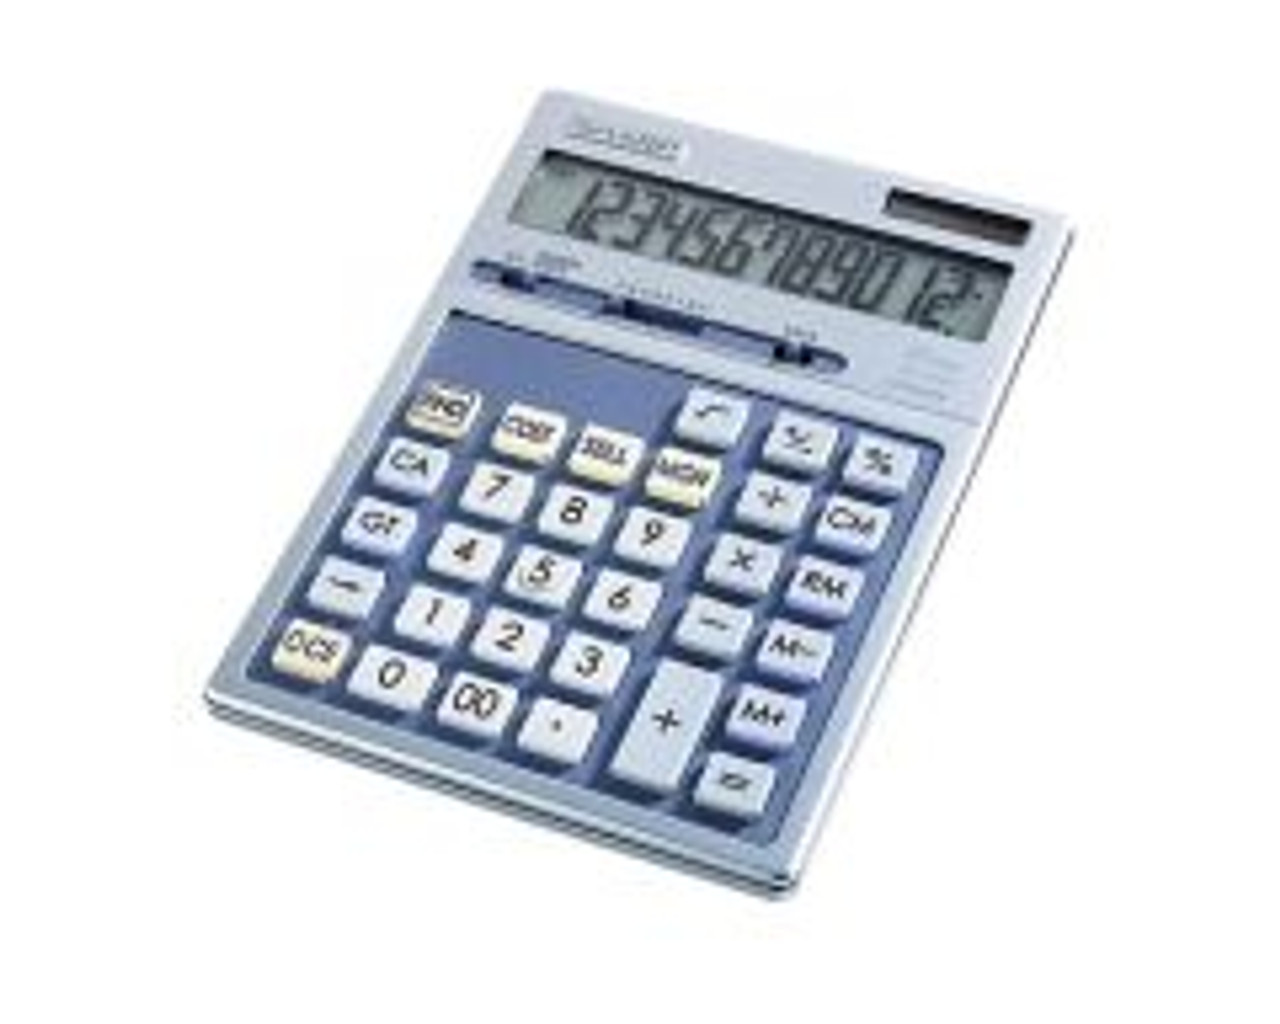 Calculator, 12-Digit, Desktop